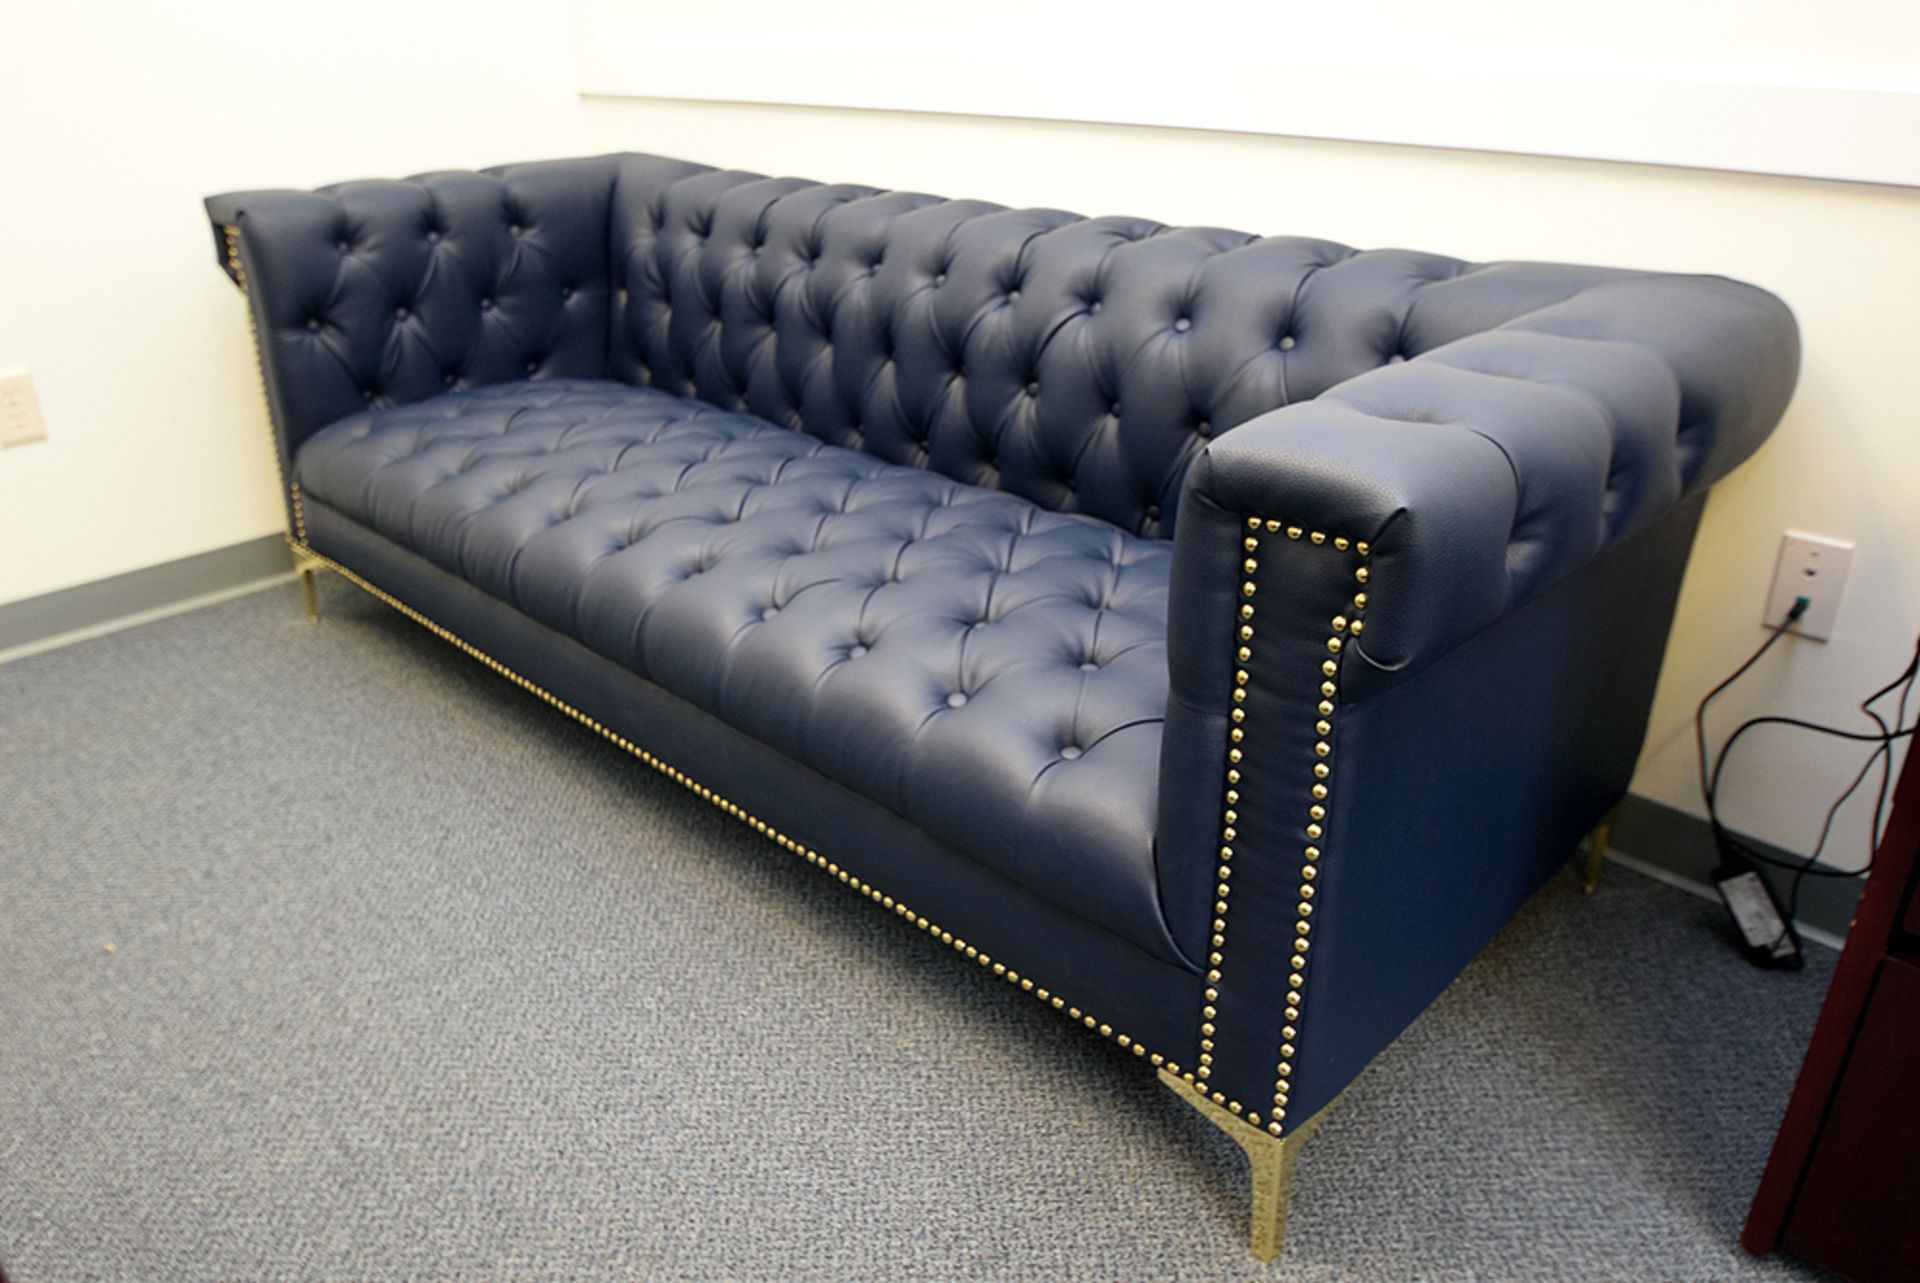 Blue Tuffted Faux Leather Sofa (82" L. x 33" W.)